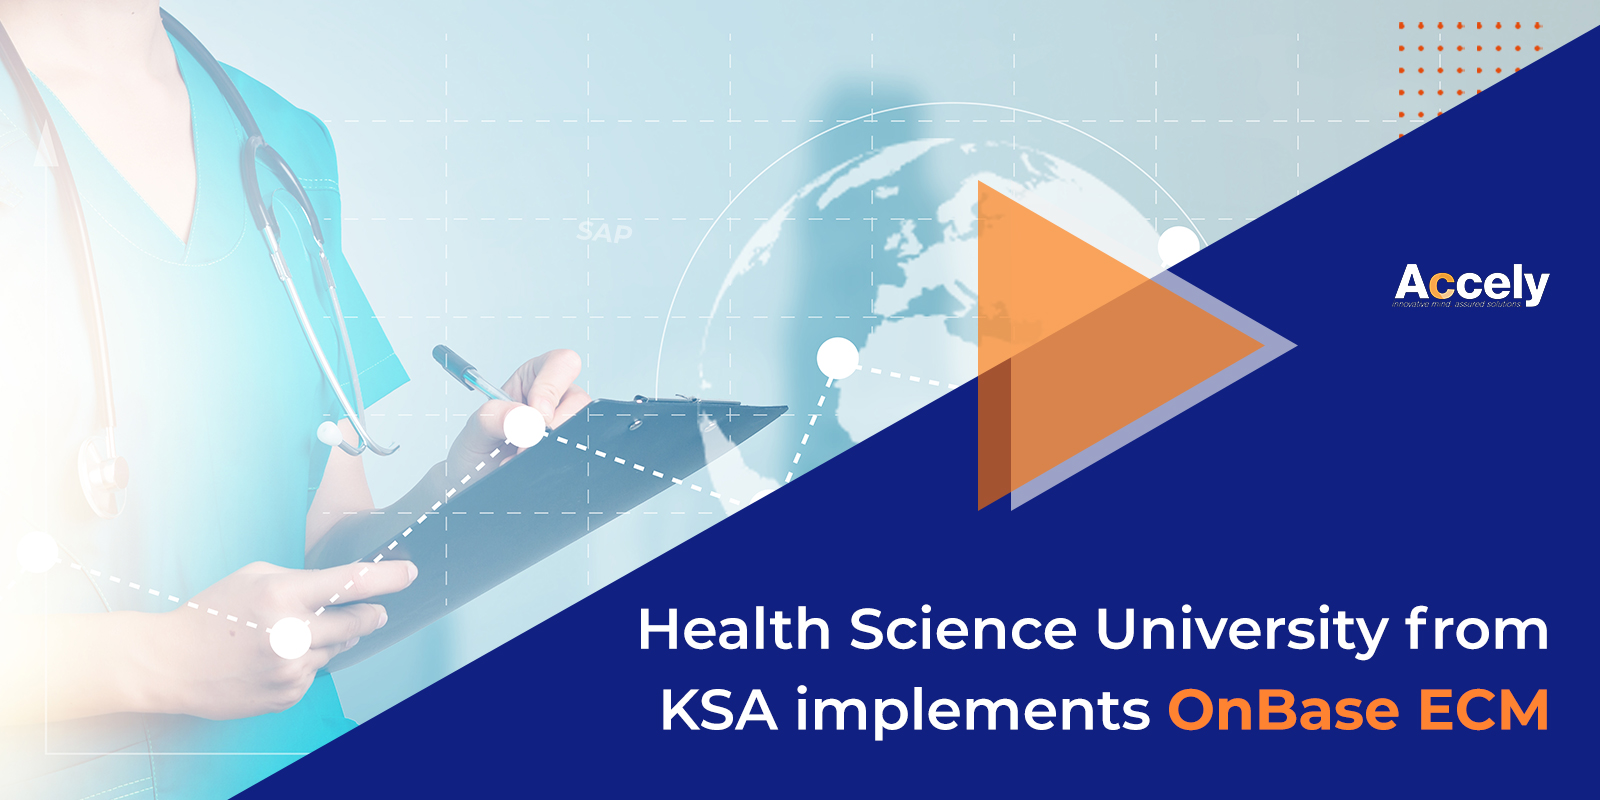 Health Science University from KSA implements OnBase ECM